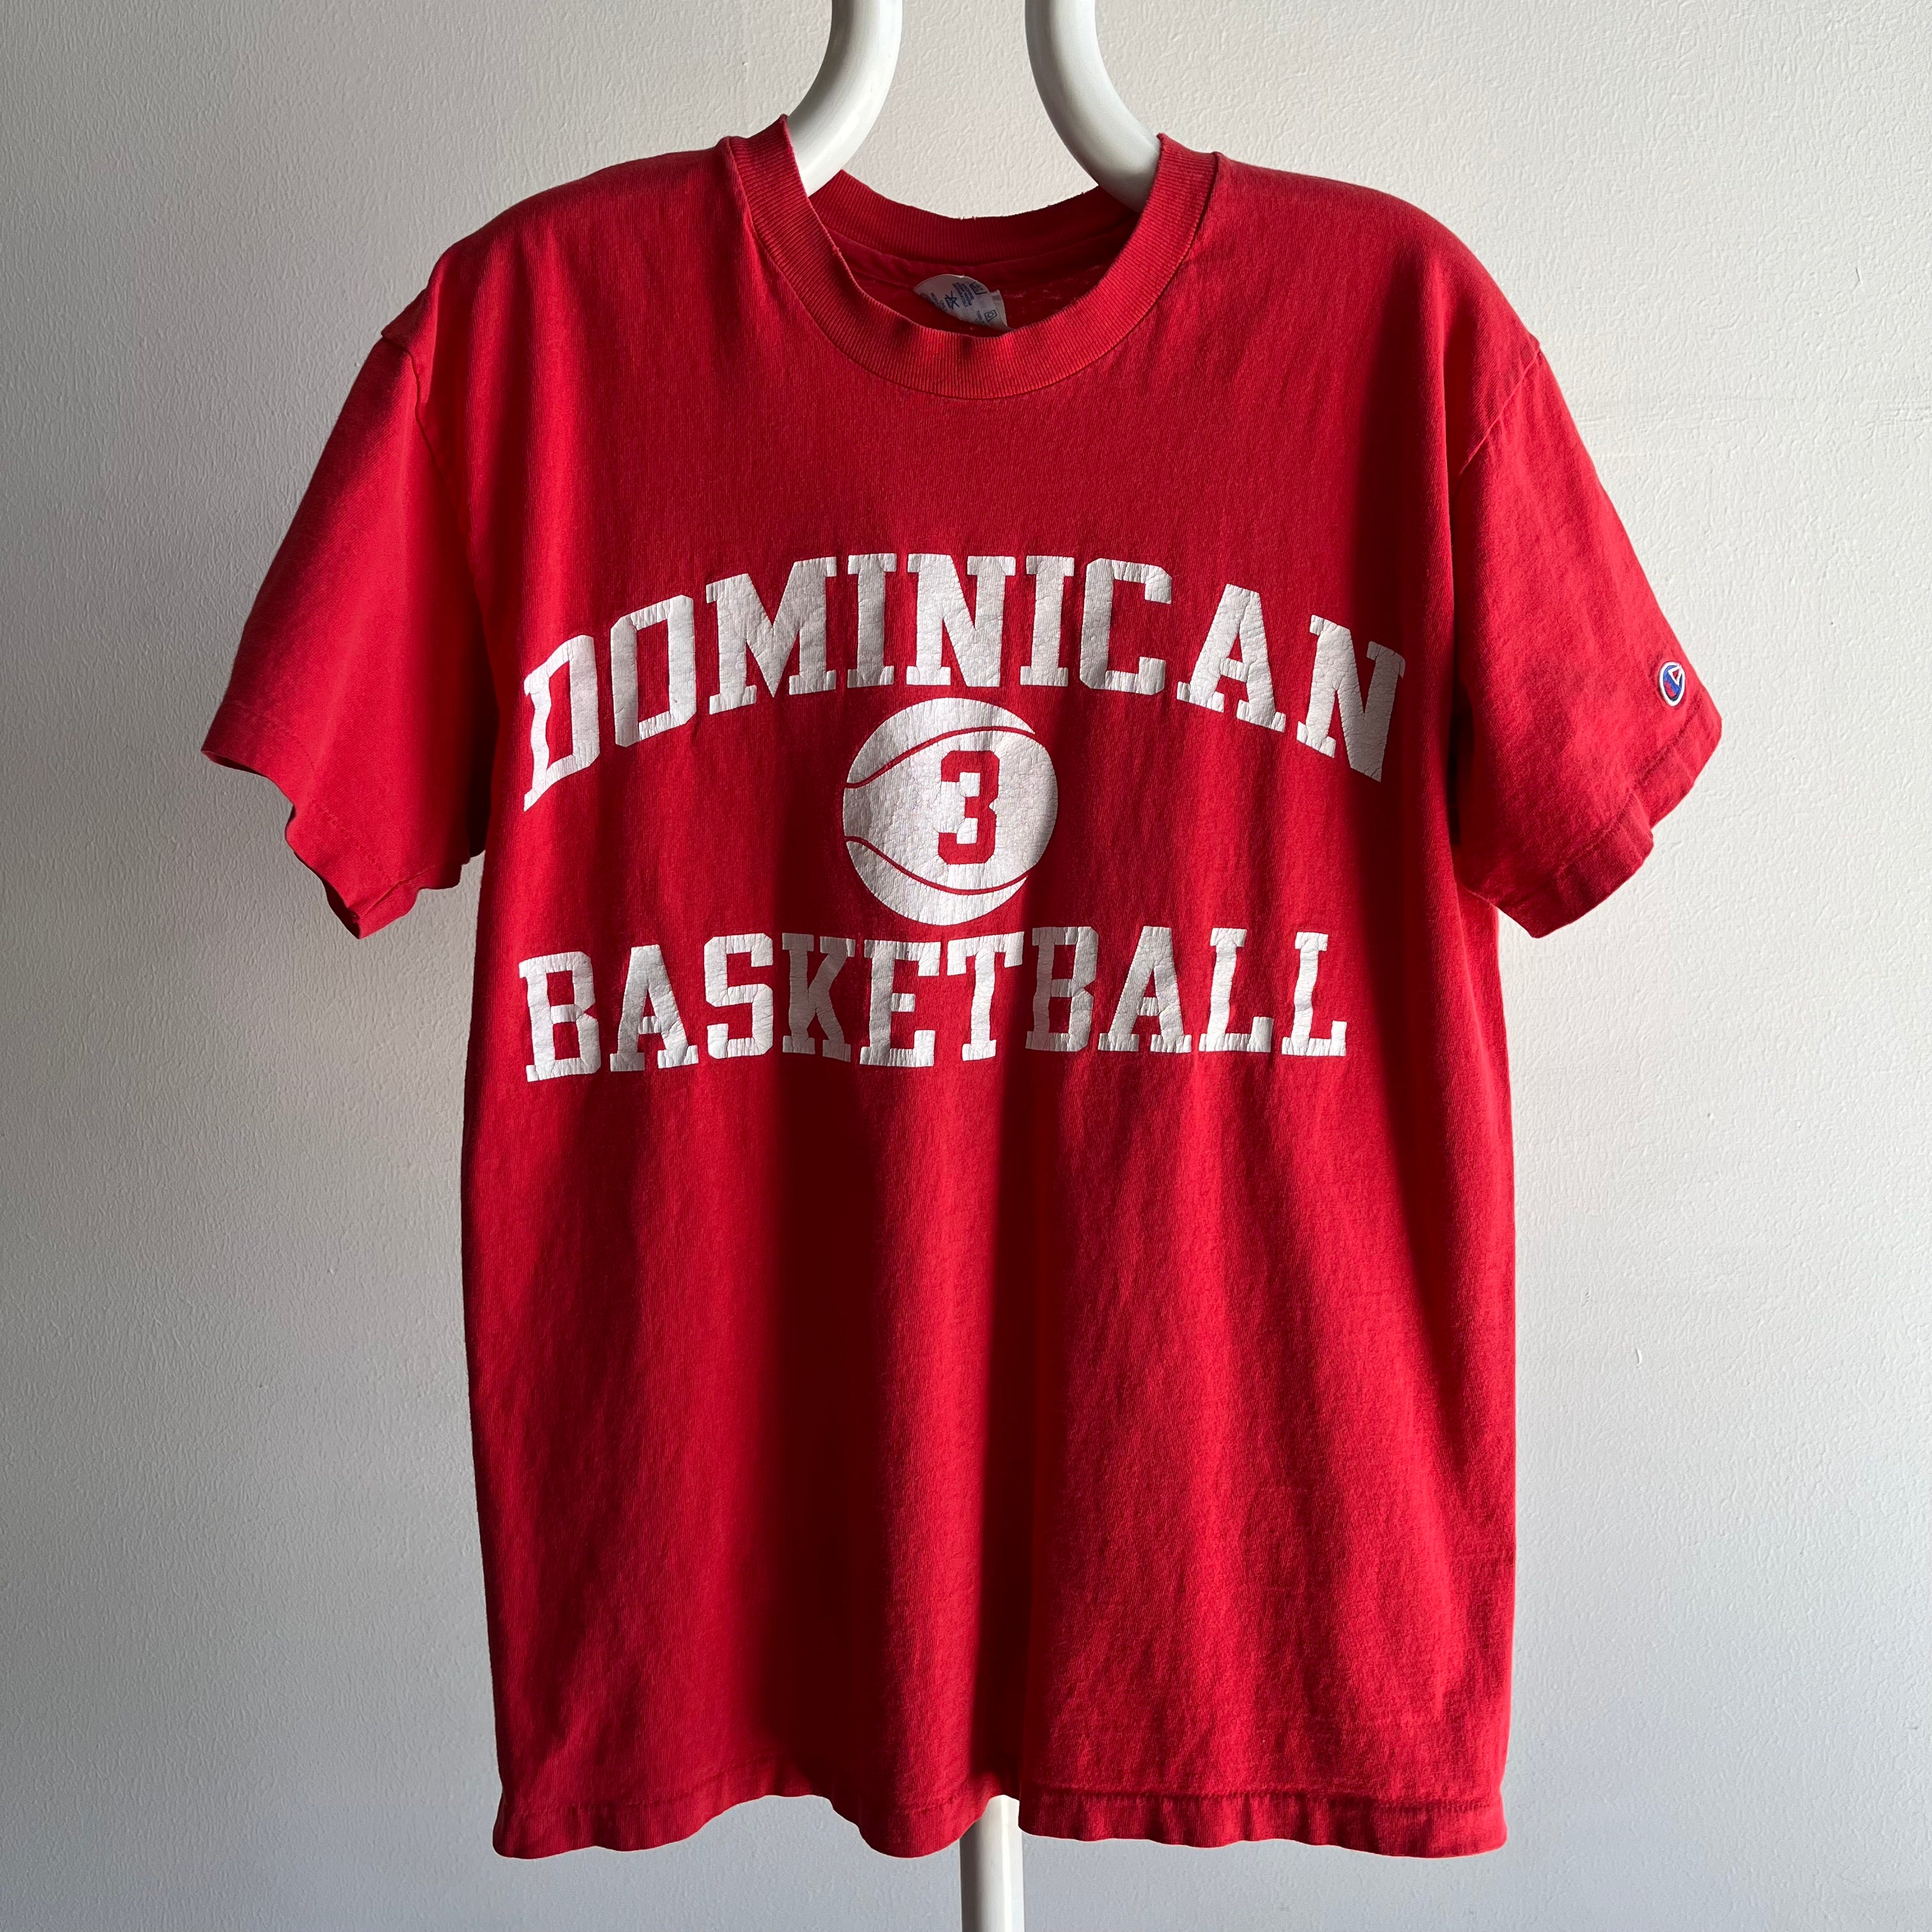 1990s Champion Brand Dominican Basketball T-Shirt